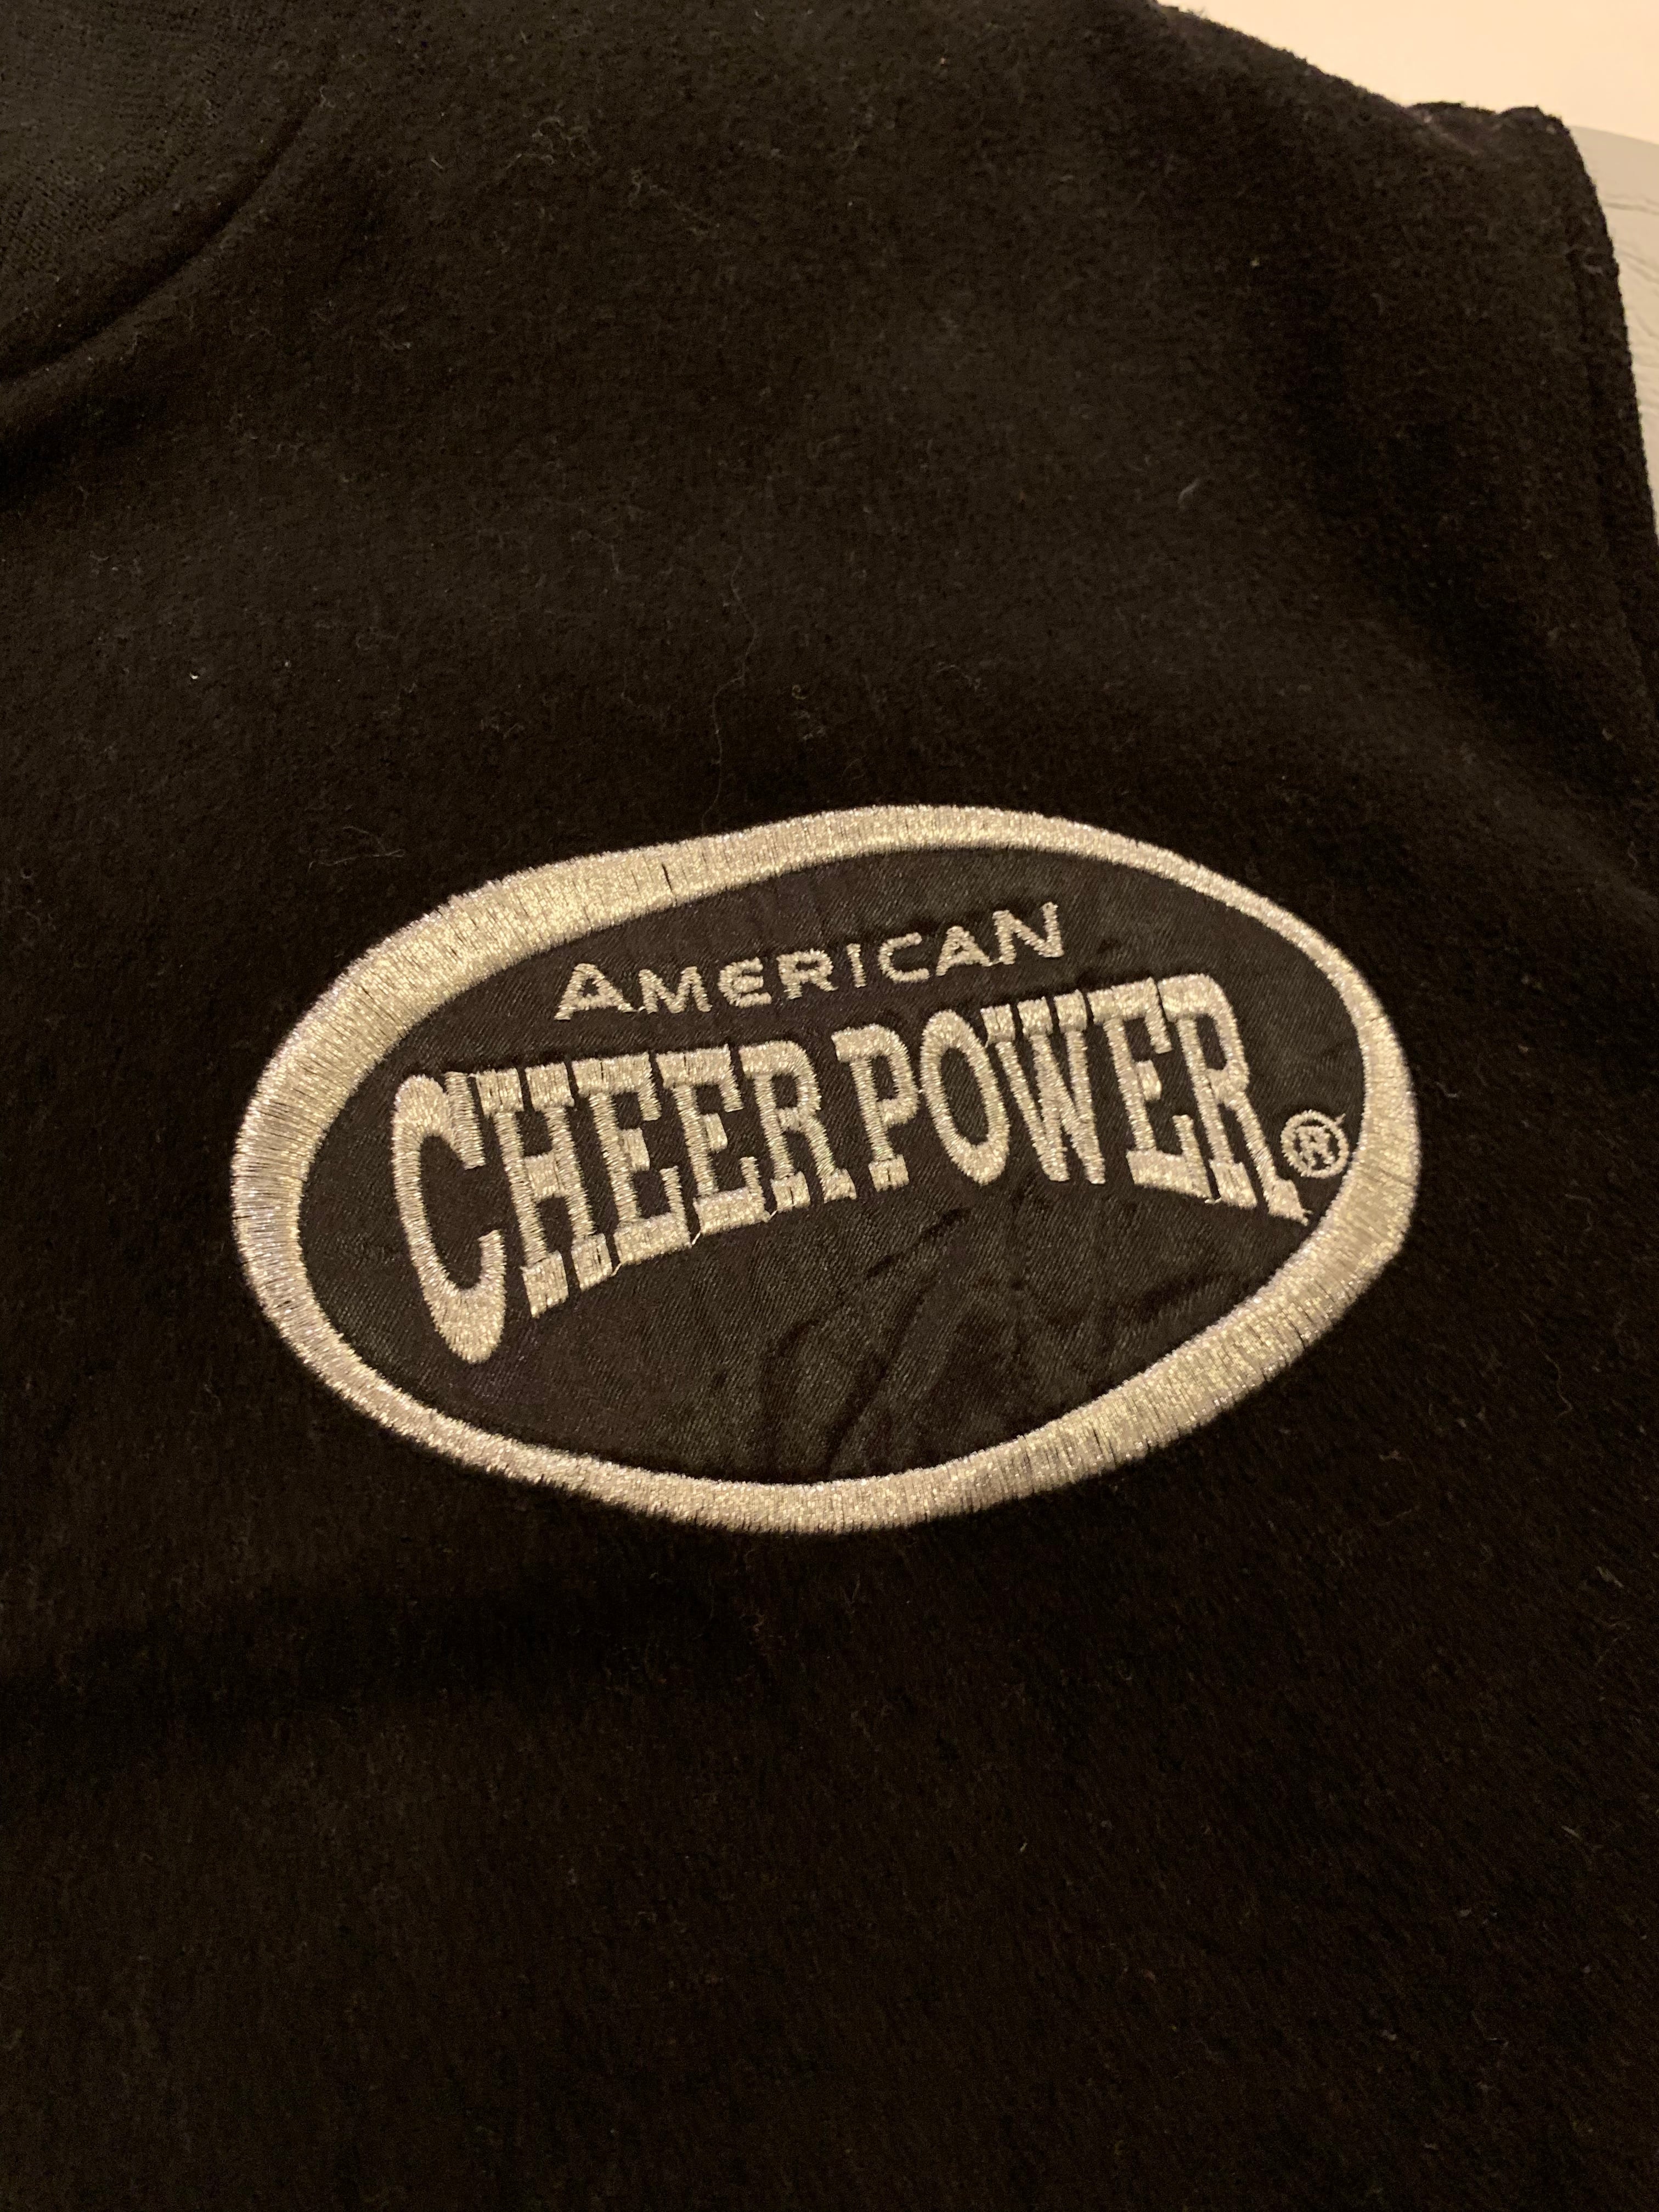 American Cheer Power Award Jacket | Used & Vintage Clothing ...